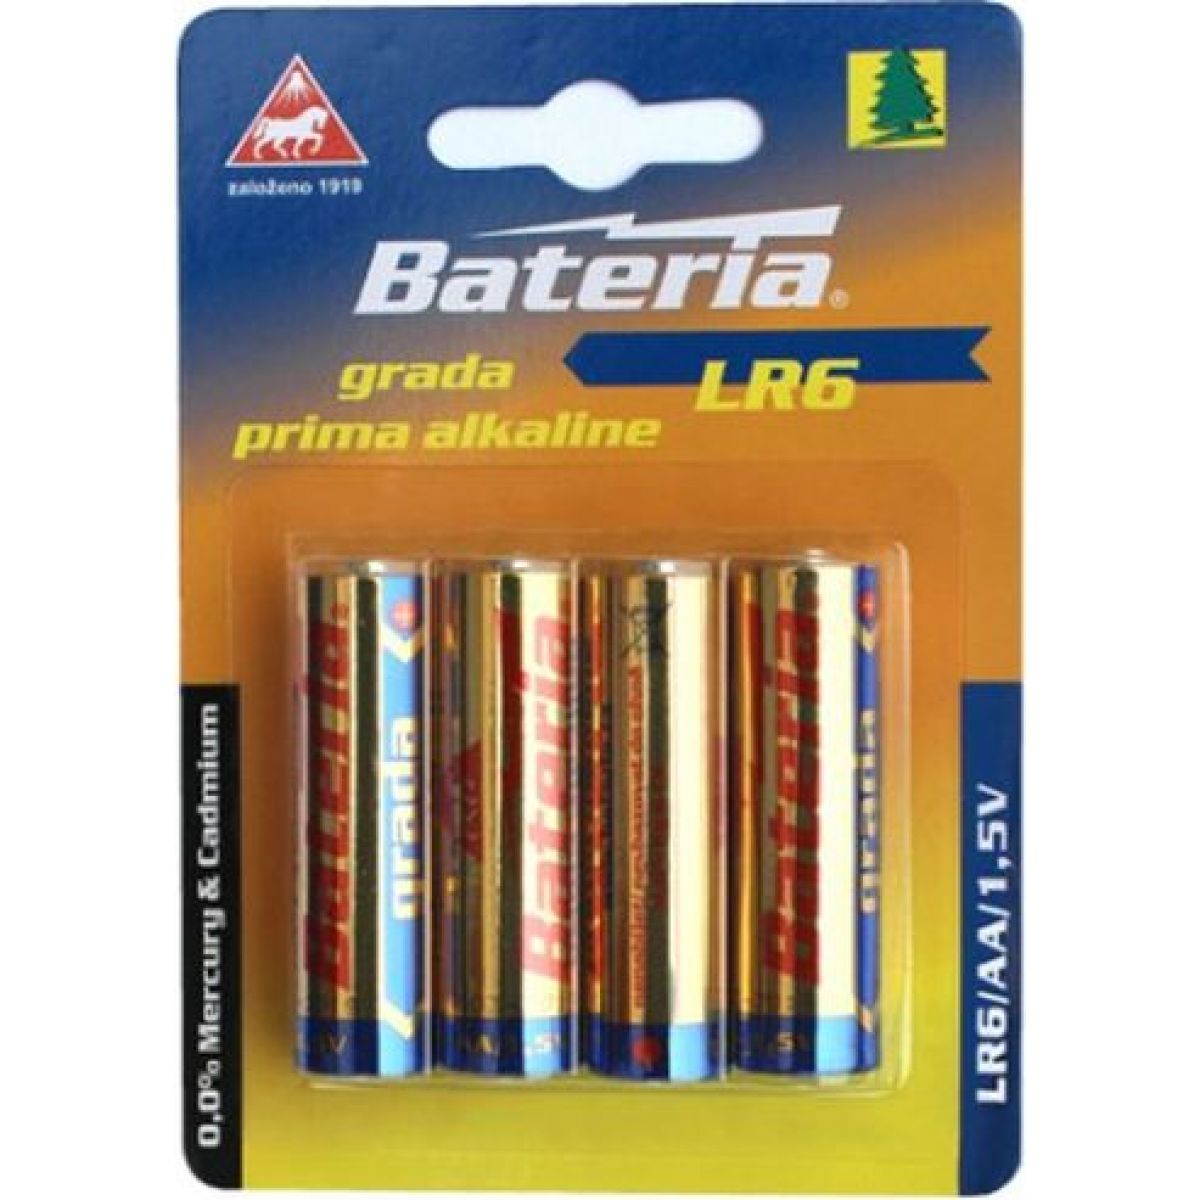 Bateria Slaný CZ Baterie Grada LR6 AA 1,5V 4ks